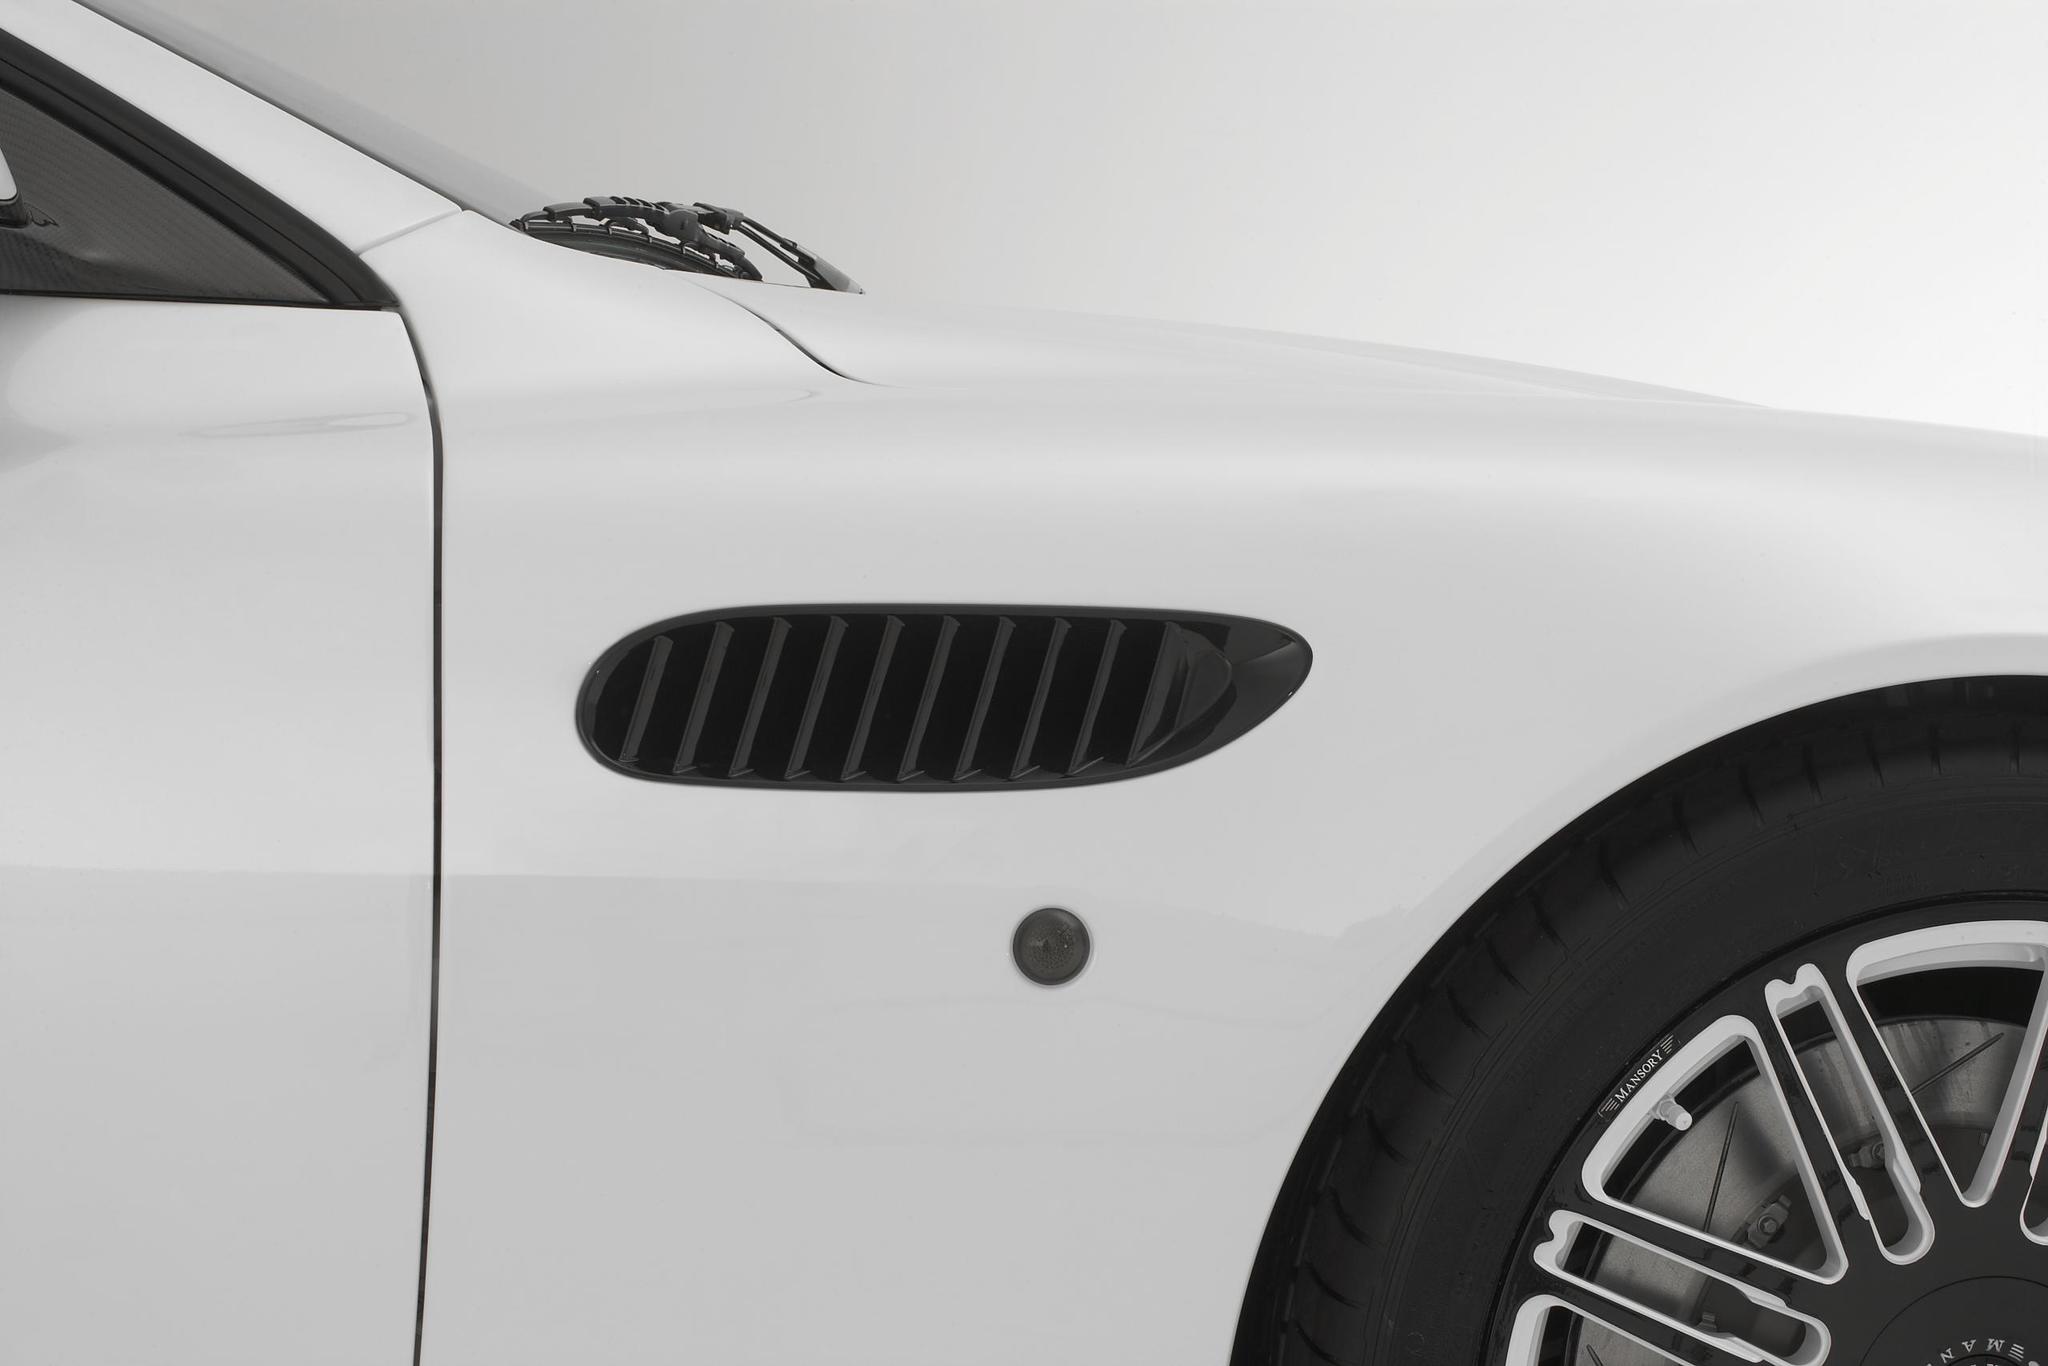 Mansory body kit for Aston Martin Vanquish carbon